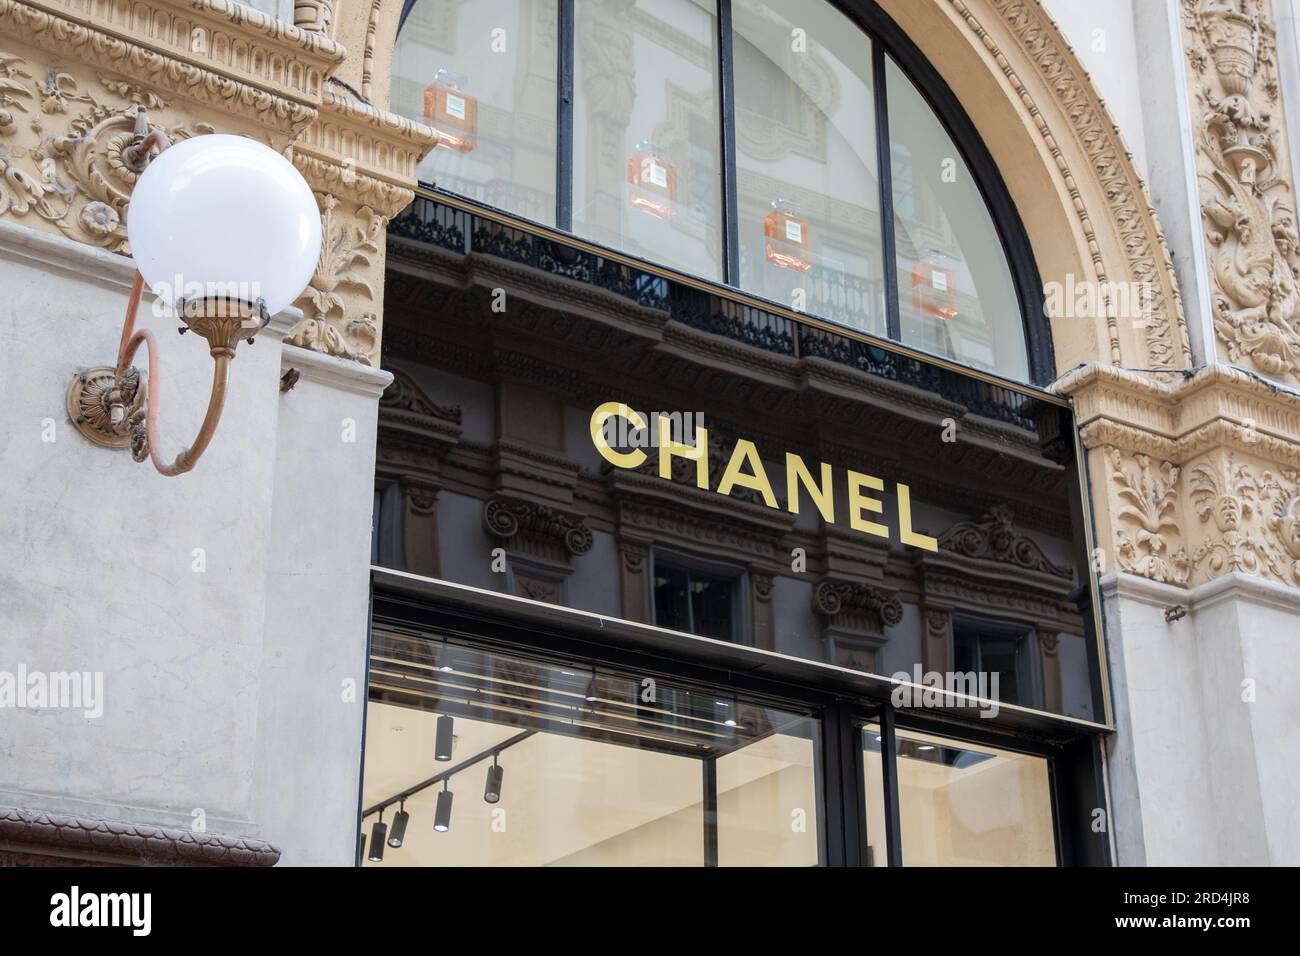 File:Chanel store, Paris 2009 001.jpg - Wikimedia Commons